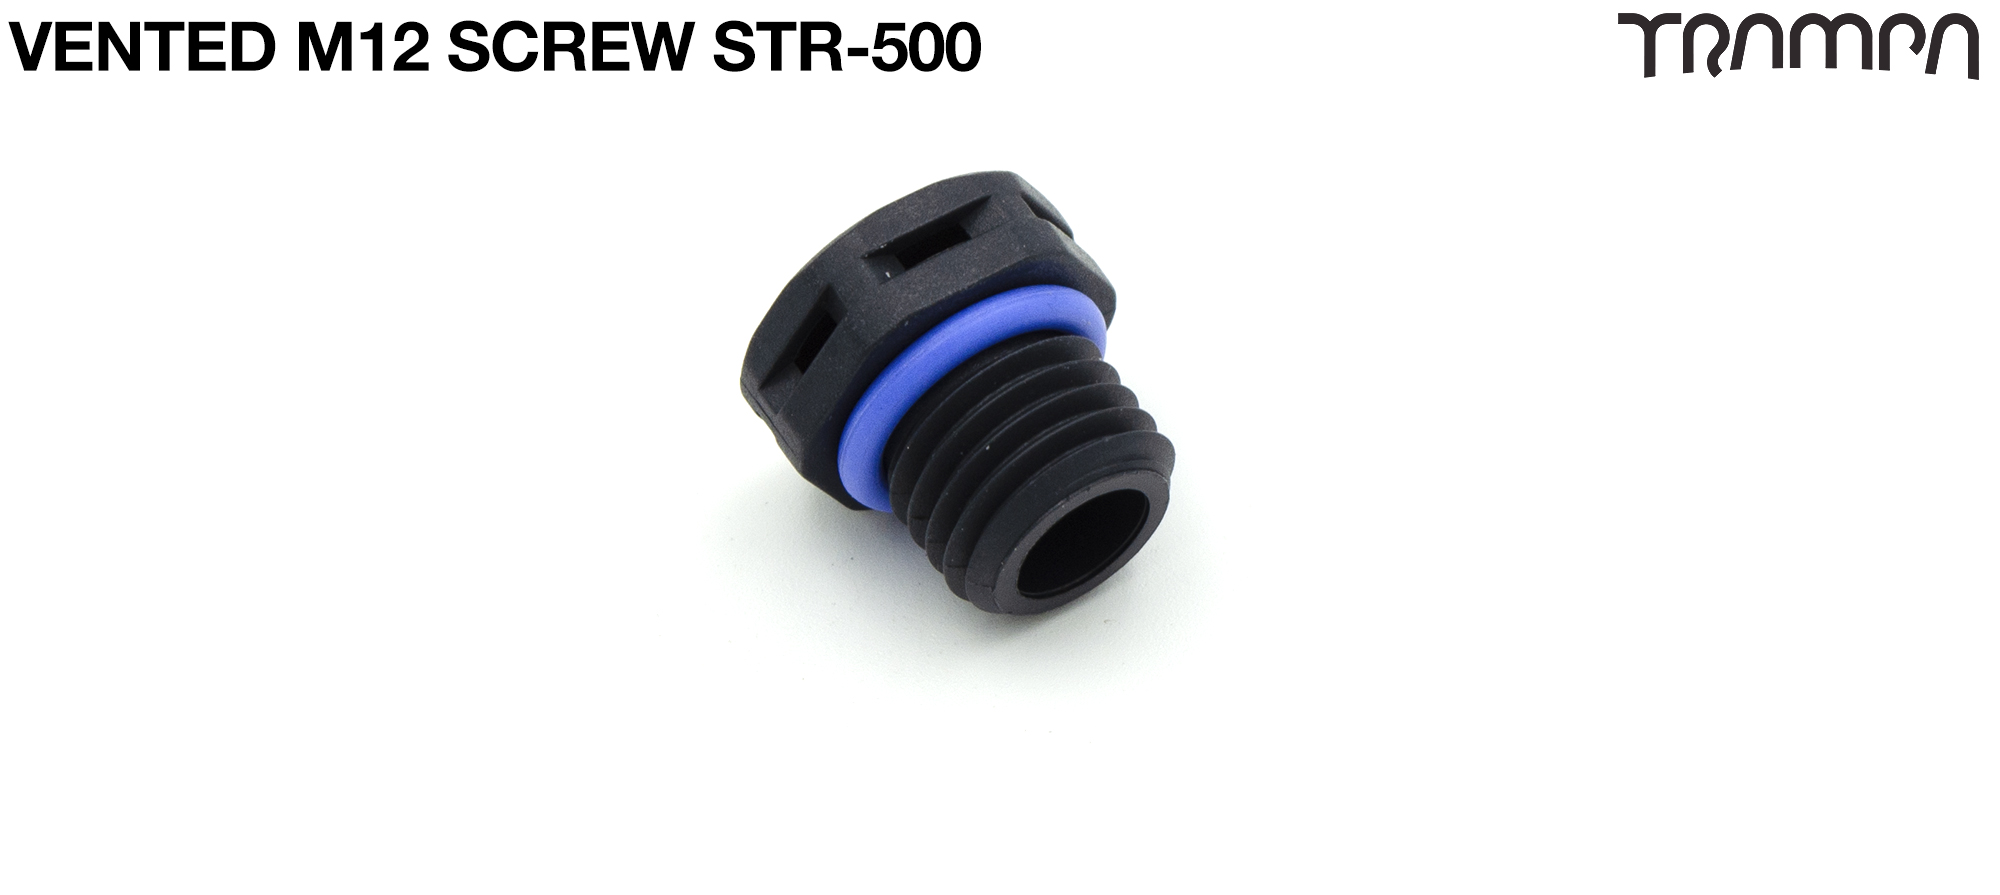 Vented M12 SCREW - SRT-500 